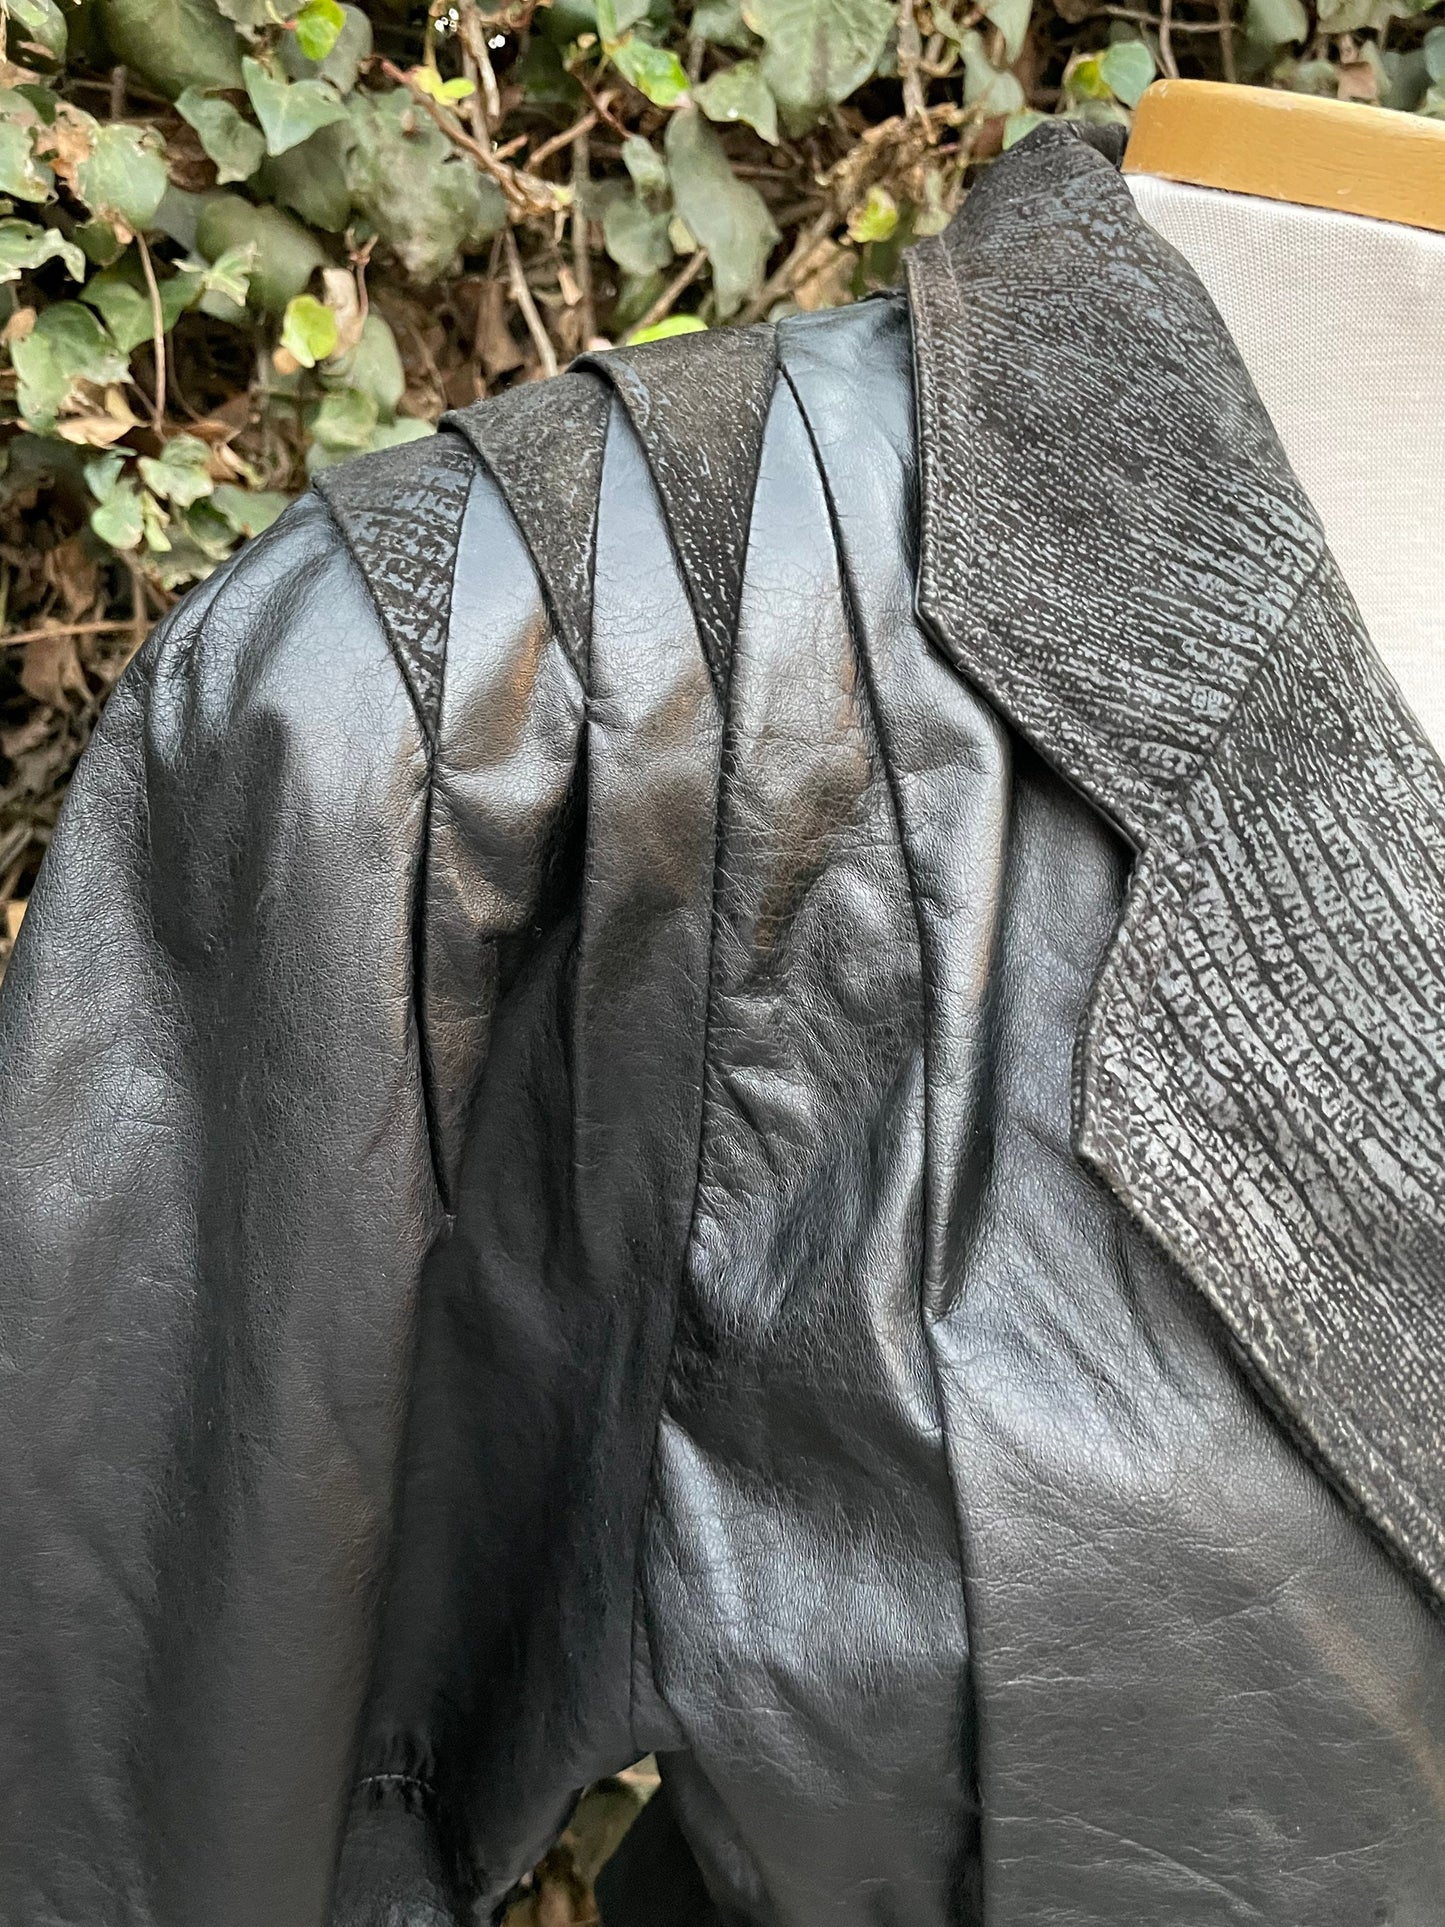 Vintage 1980’s Black Leather & Suede Raglan Batwing Shoulder-Pad Crop Jacket